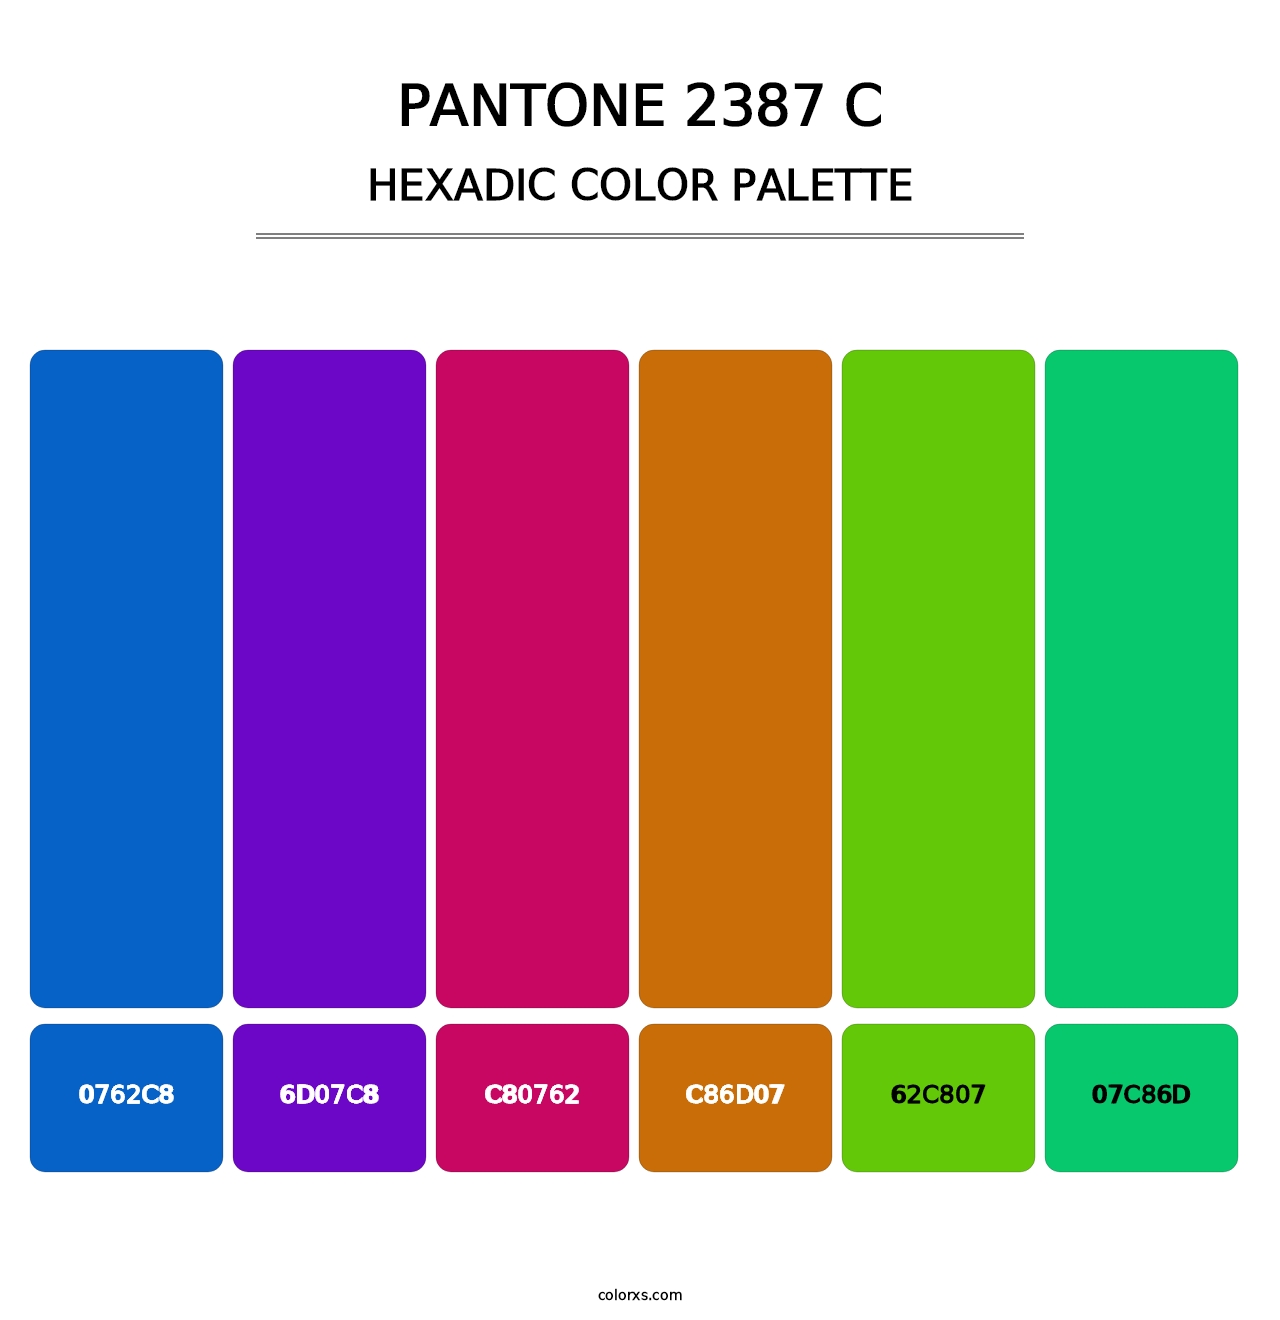 PANTONE 2387 C - Hexadic Color Palette